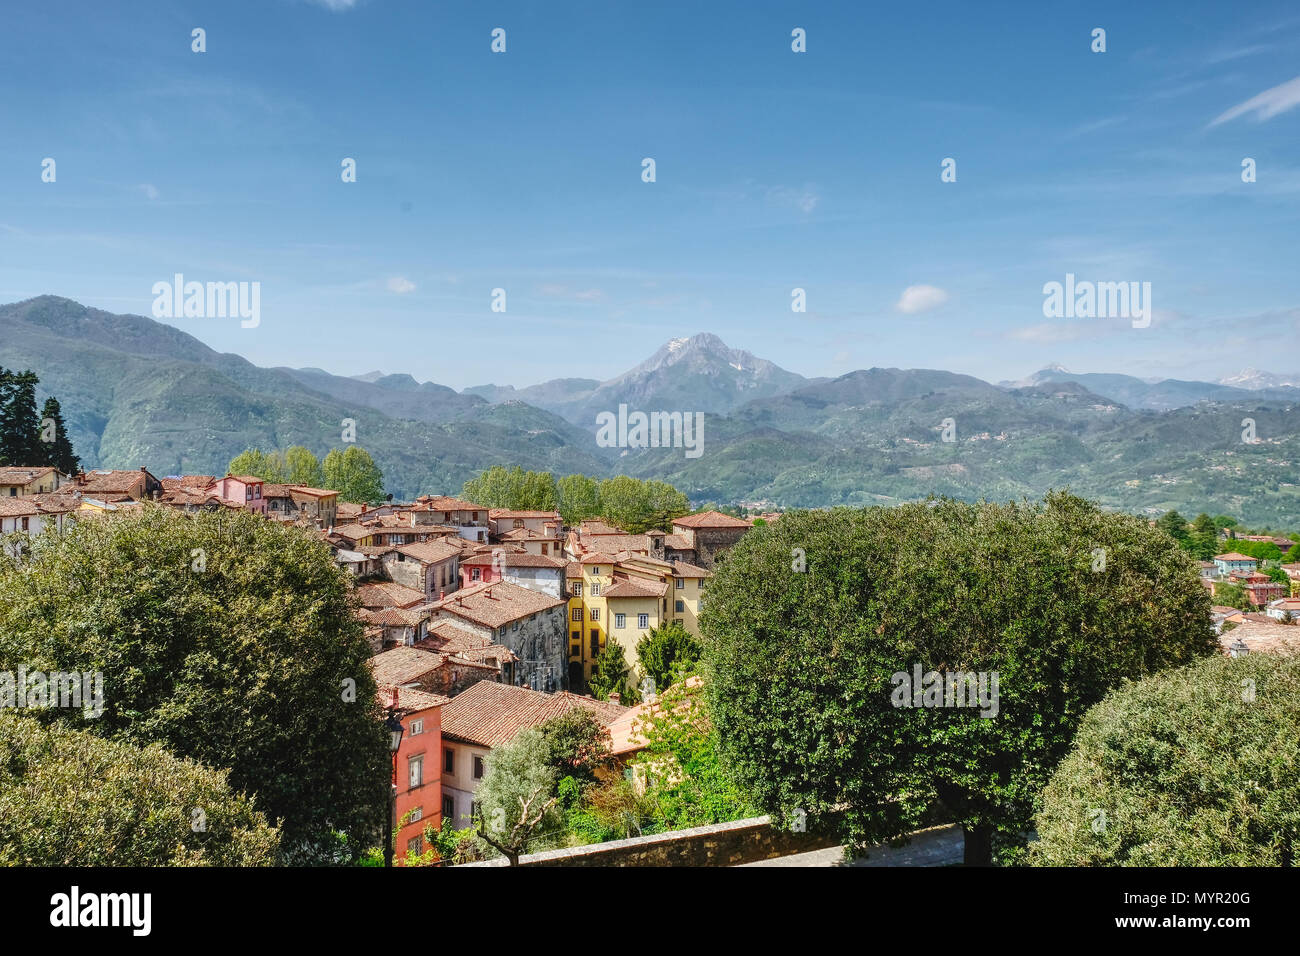 Tuscany Holiday. Bergdorf in der Garfagnana. Blick auf das Bergpanorama mit dem Monte Forato Stock Photo